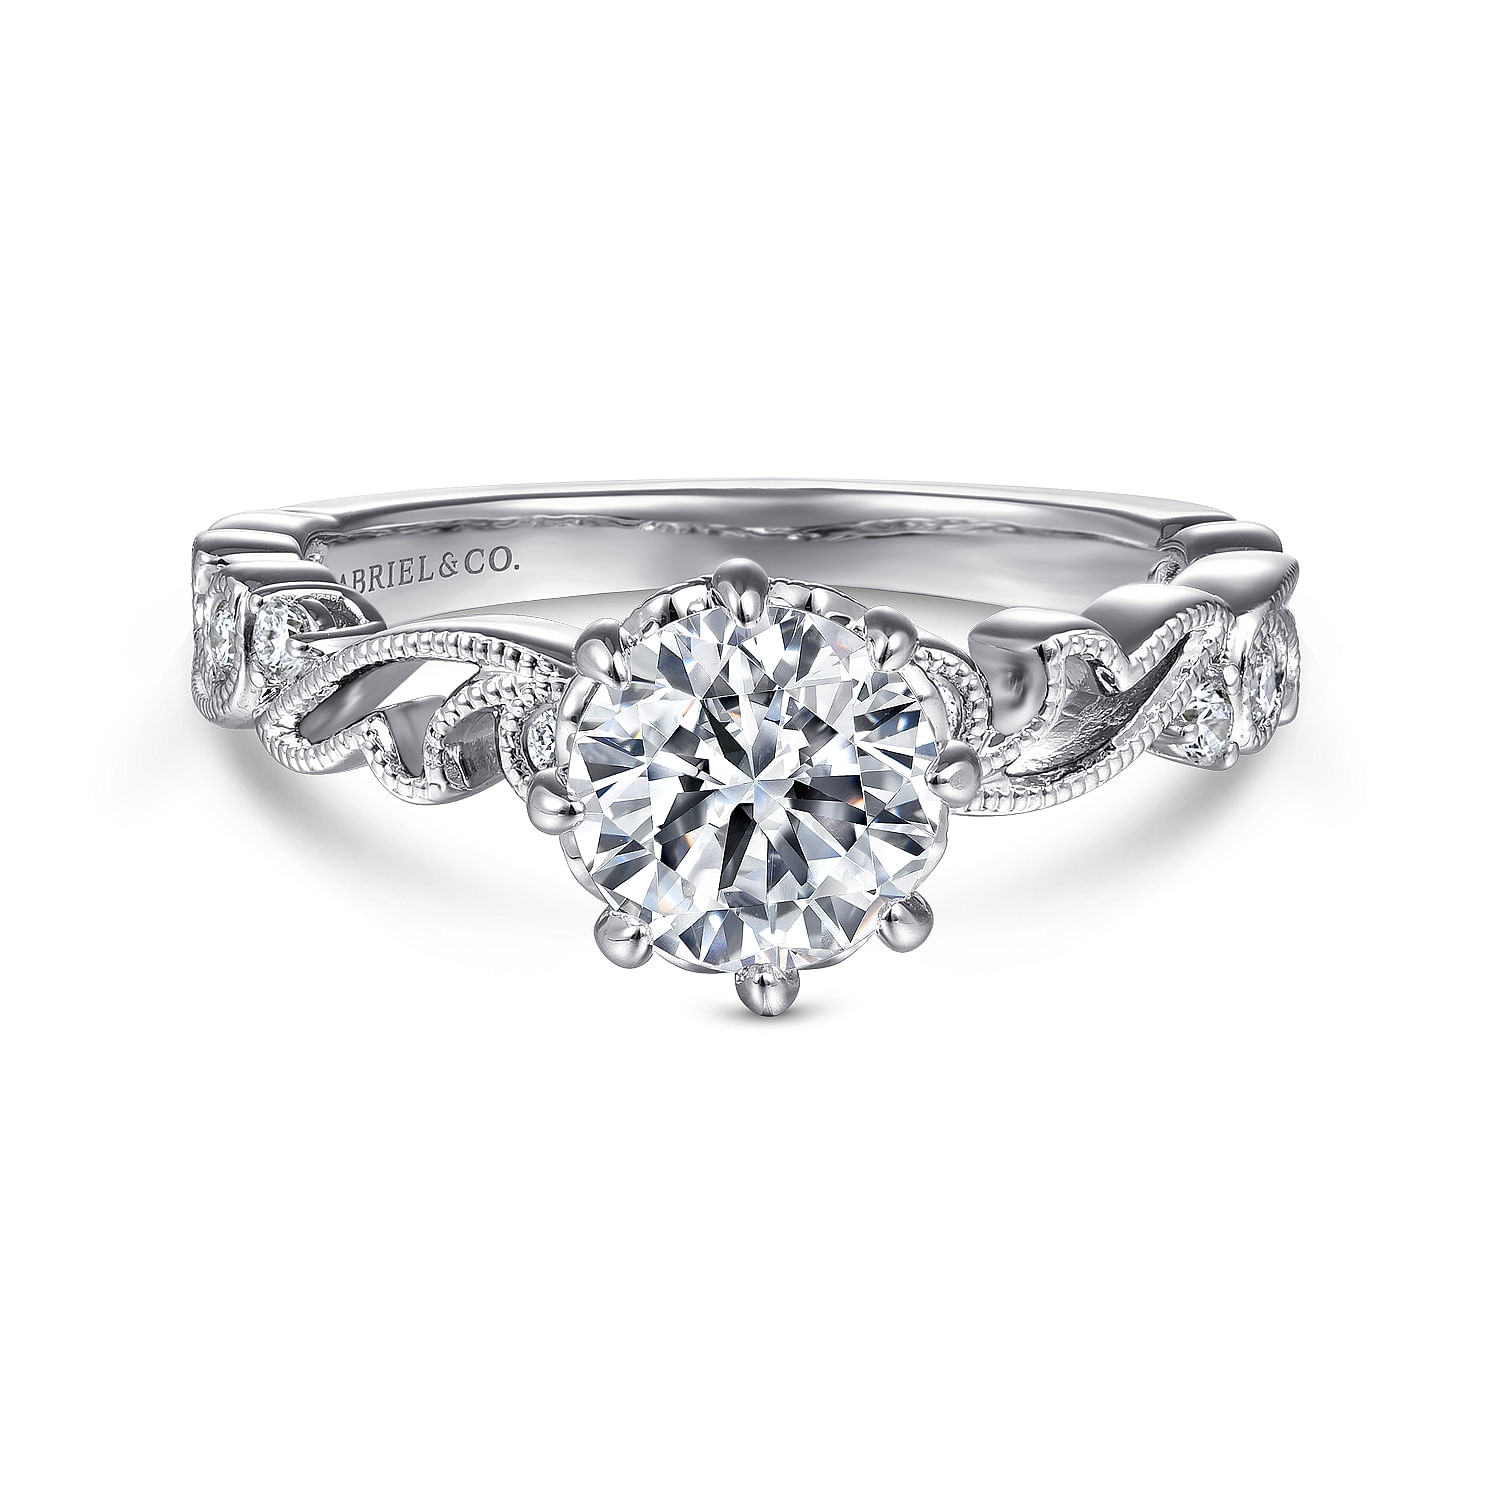 Arlington---Vintage-Inspired-14K-White-Gold-Round-Diamond-Engagement-Ring1